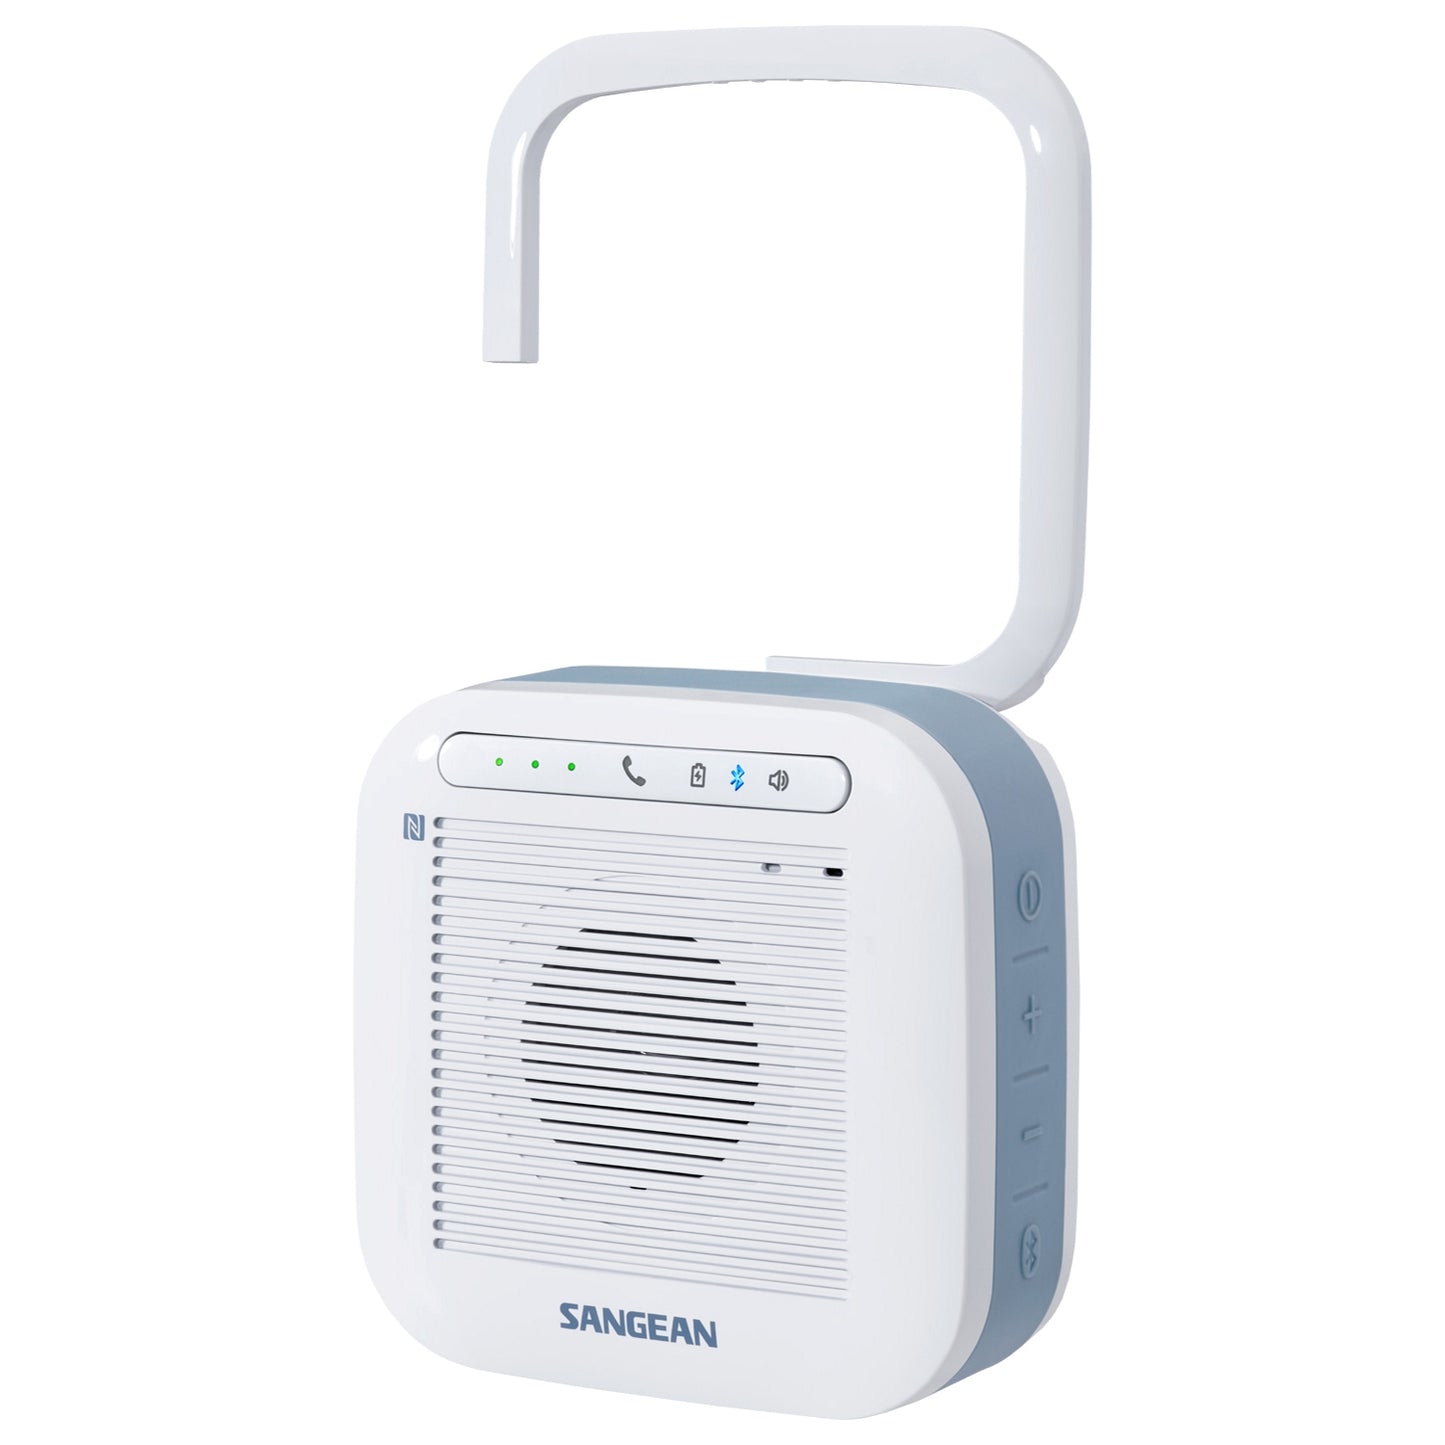 Sangean H-200 wasserfester Bluetooth 4.1 Lautsprecher